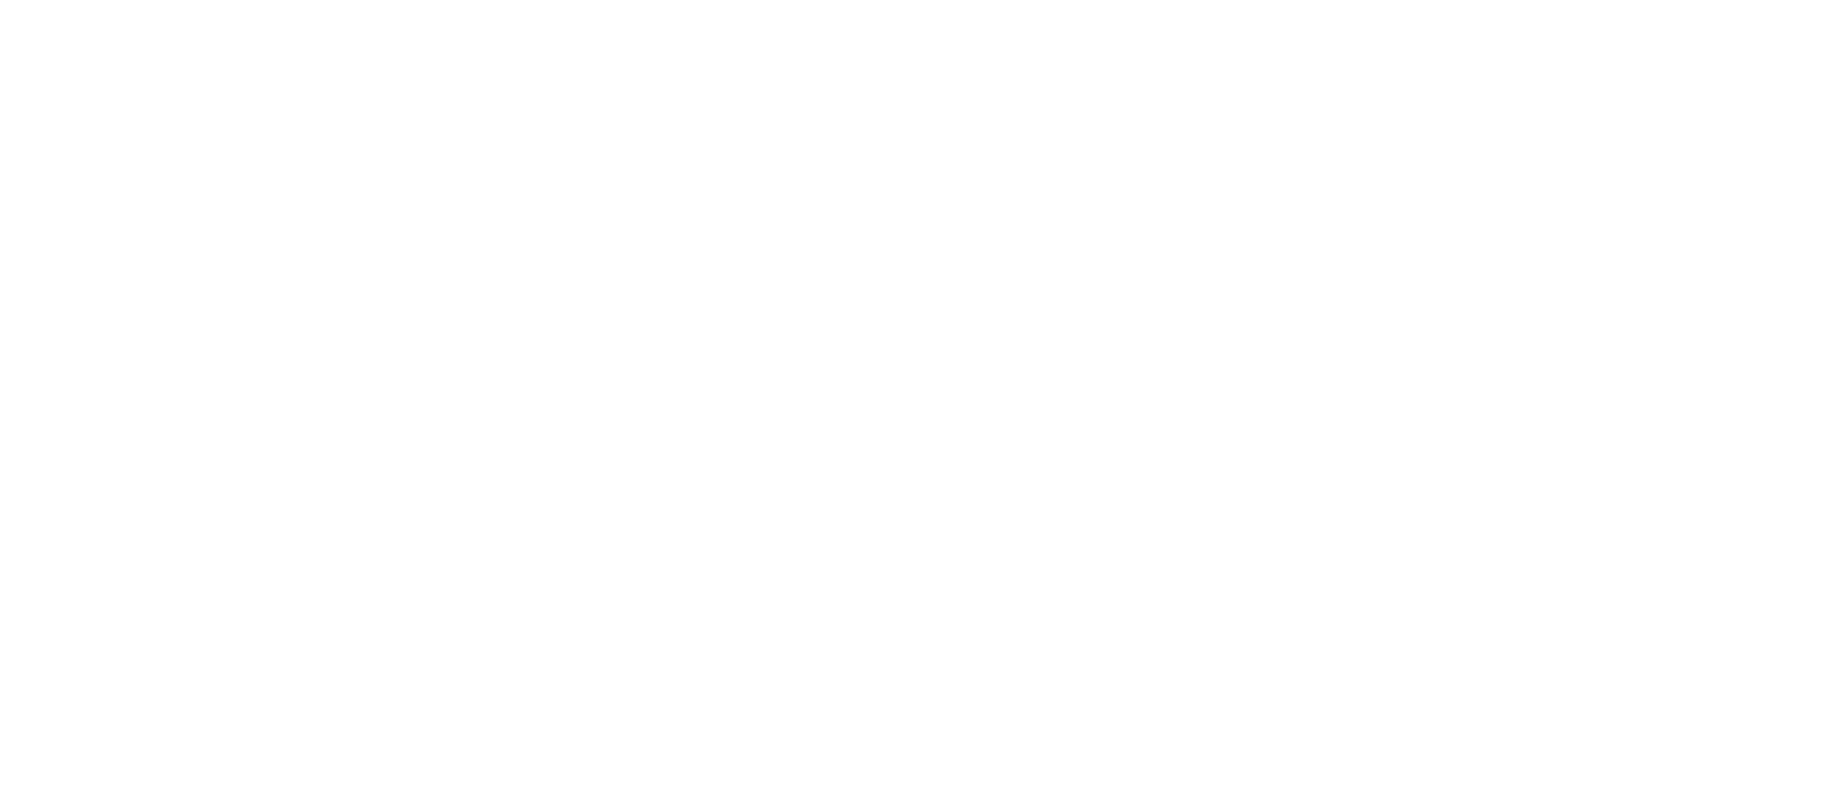 Samara Speakers Agency_WHT